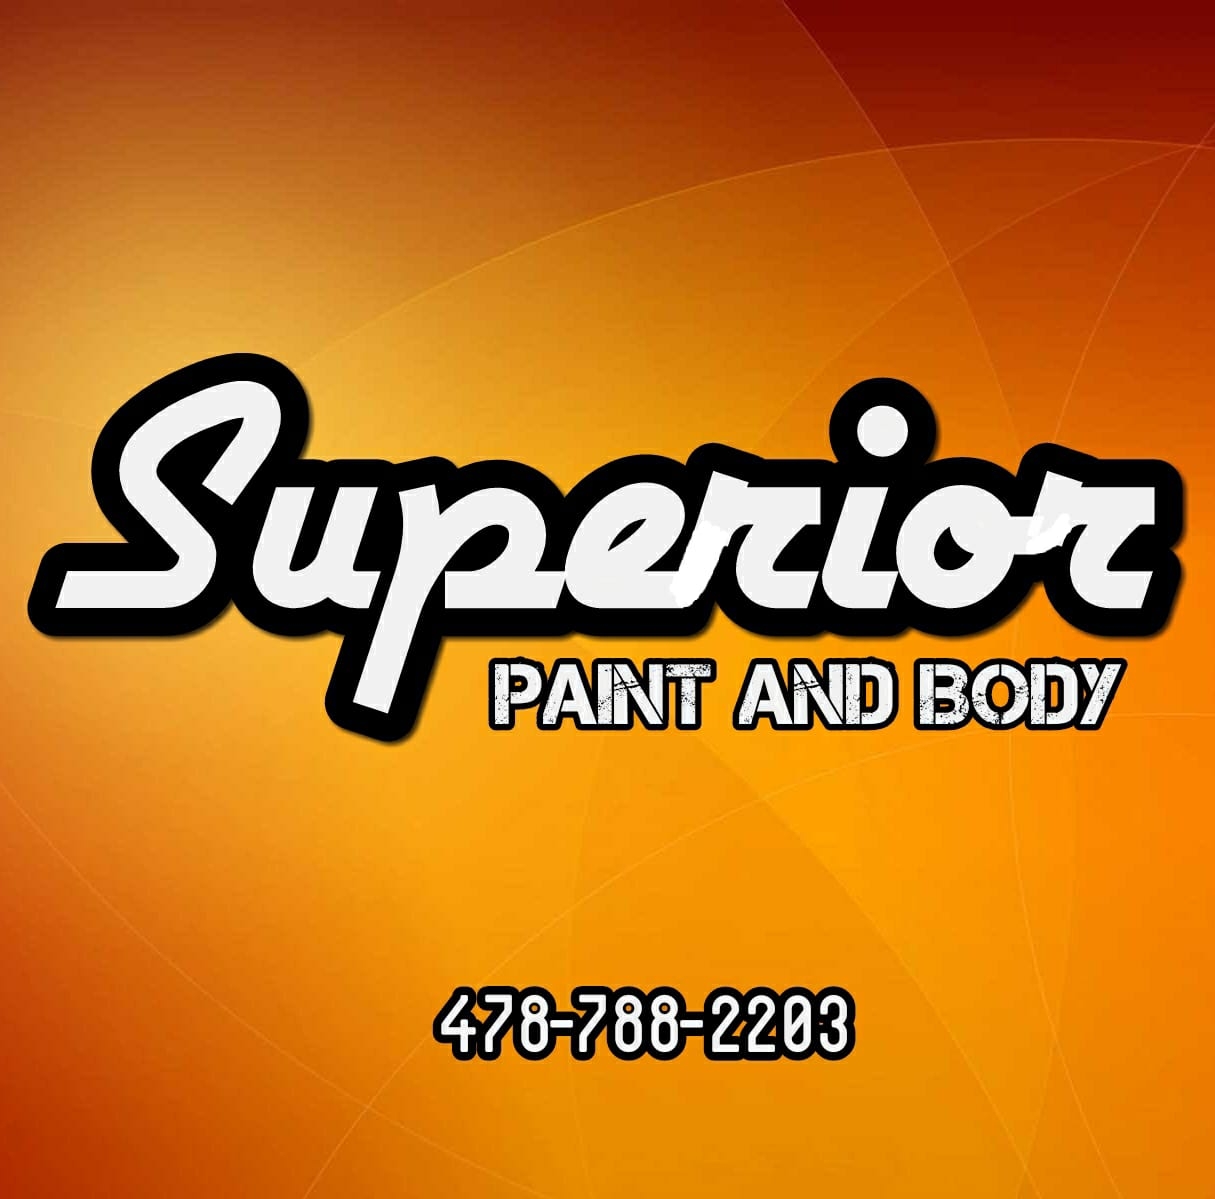 Company logo of Superior Paint Shop Inc.